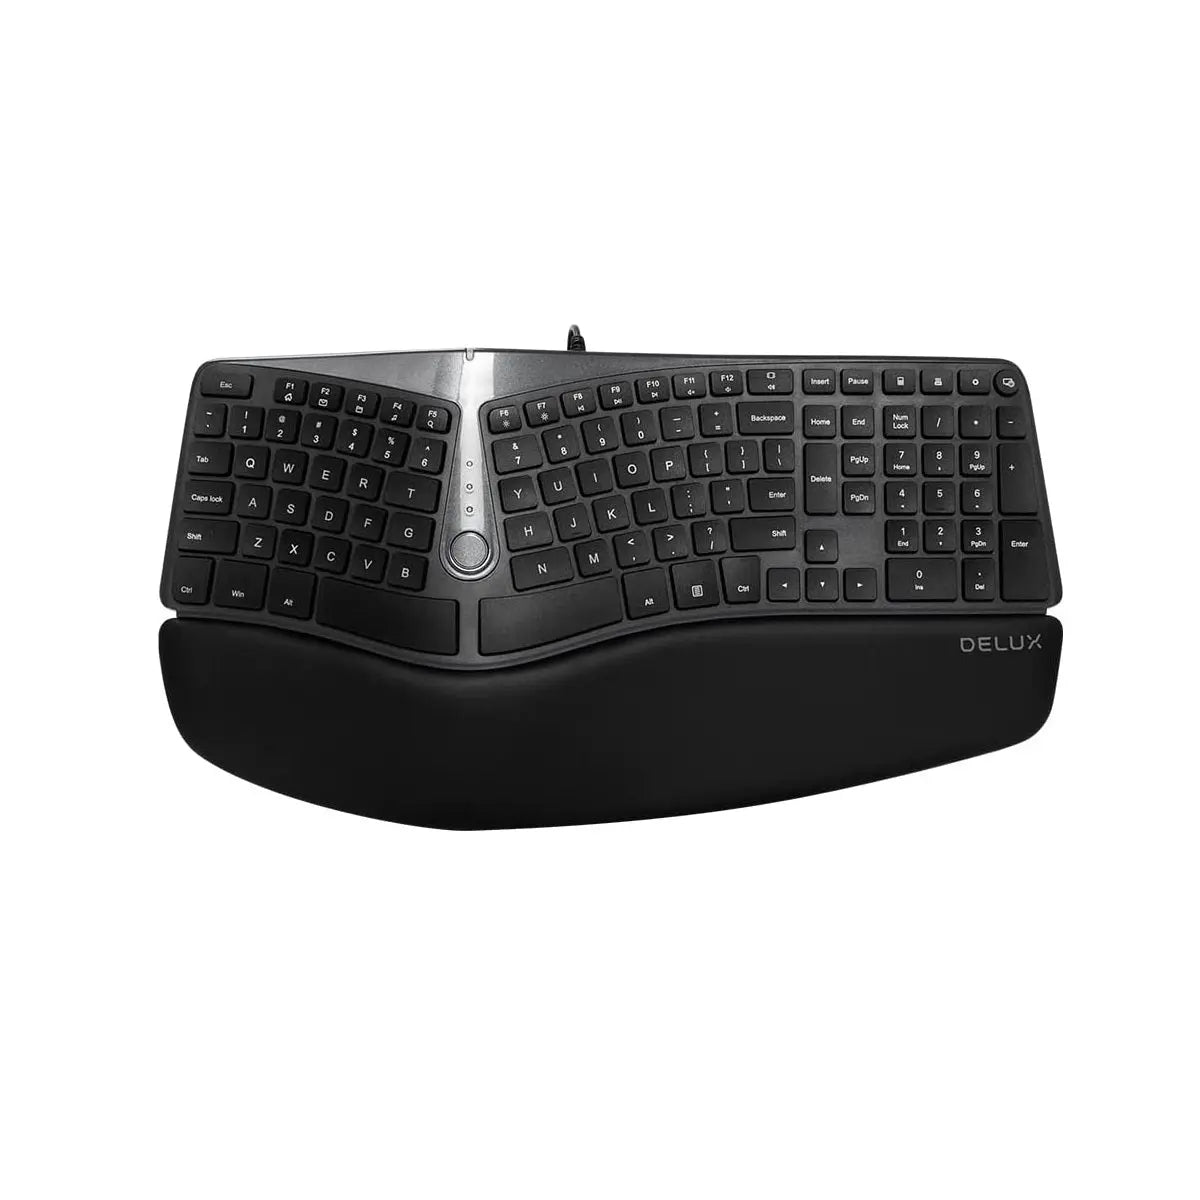 Gesplitst ergonomisch toetsenbord - toetsenbord met polssteun - Delux ergonomisch toetsenbord